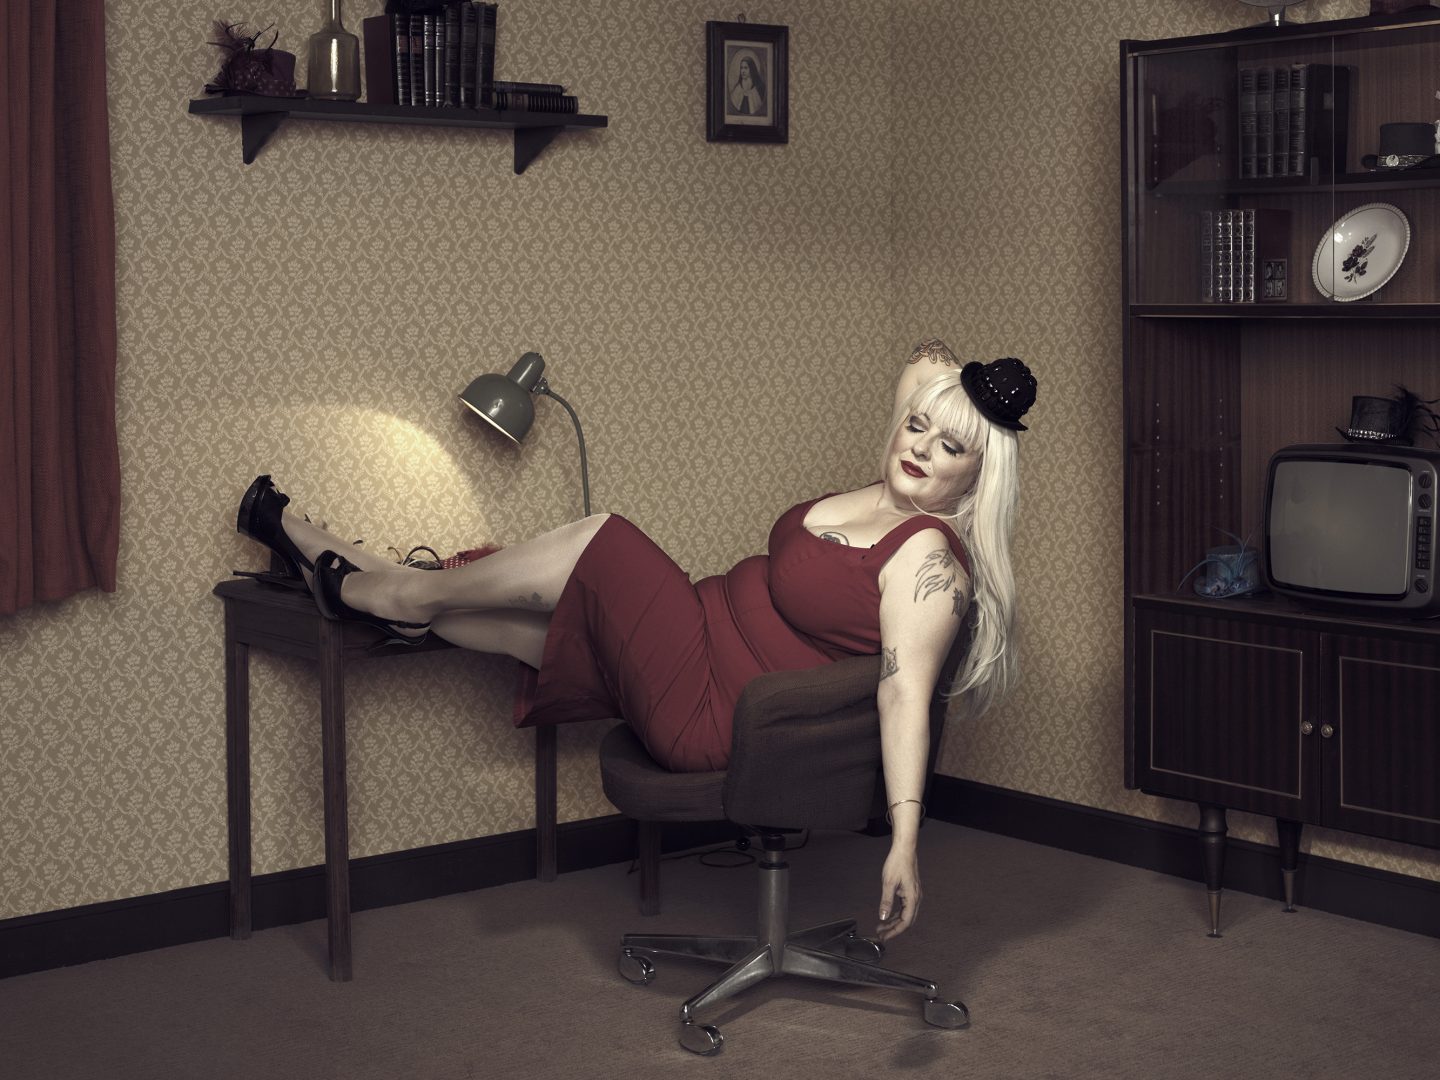 Woman in red dress sitting on chair in room 42 by Stefan Rappo